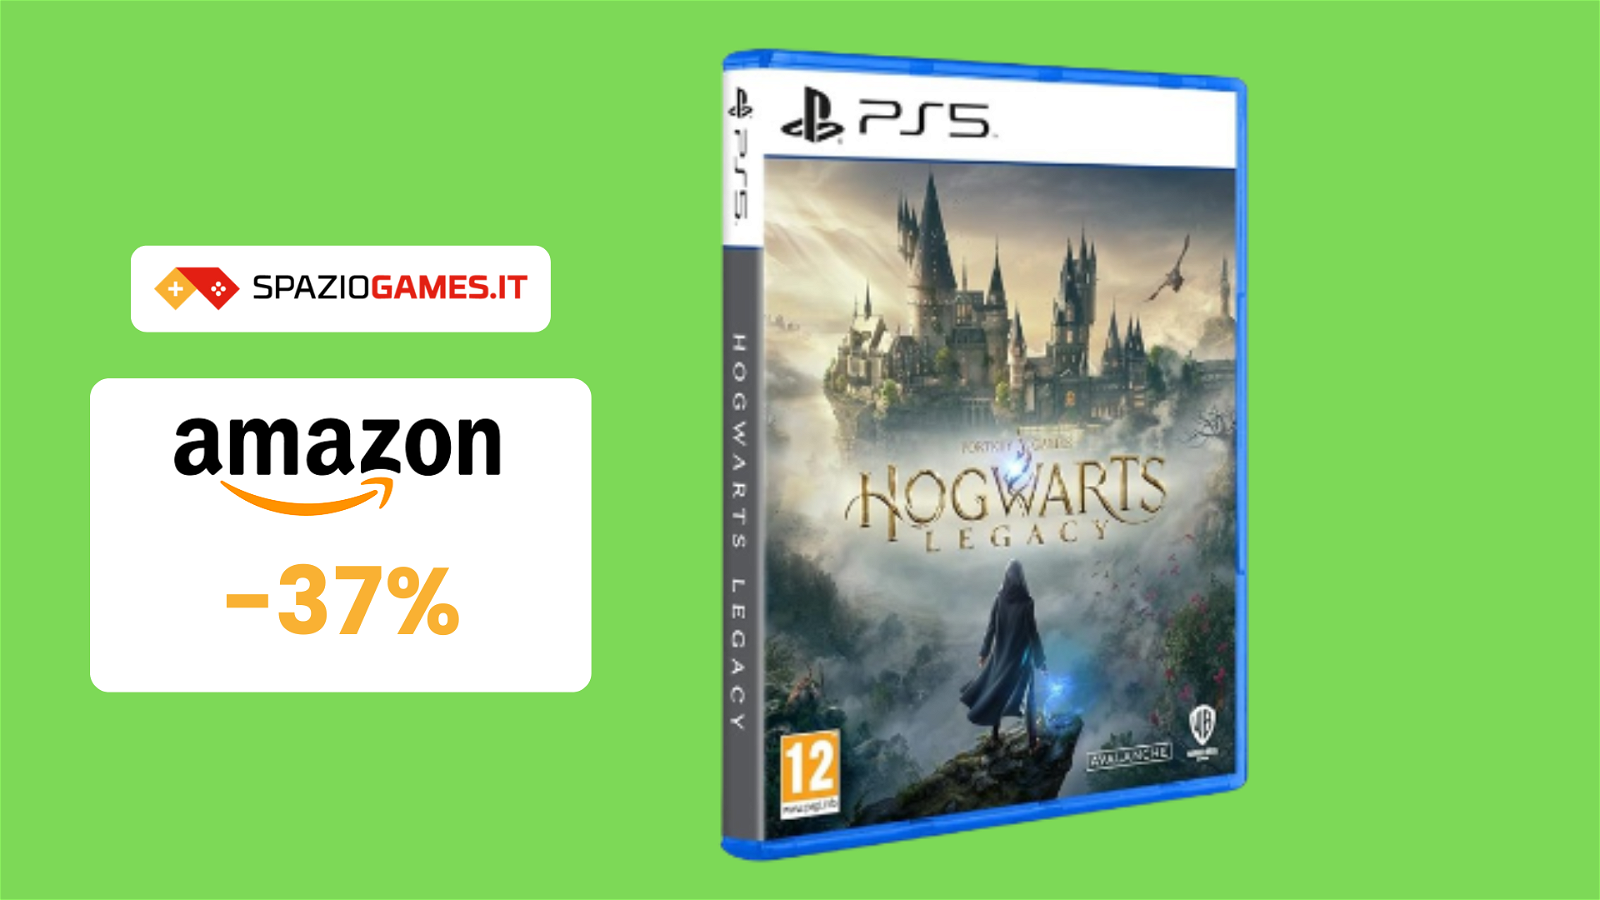 Hogwarts Legacy per PS5 al PREZZO TOP di 38€: -37%!